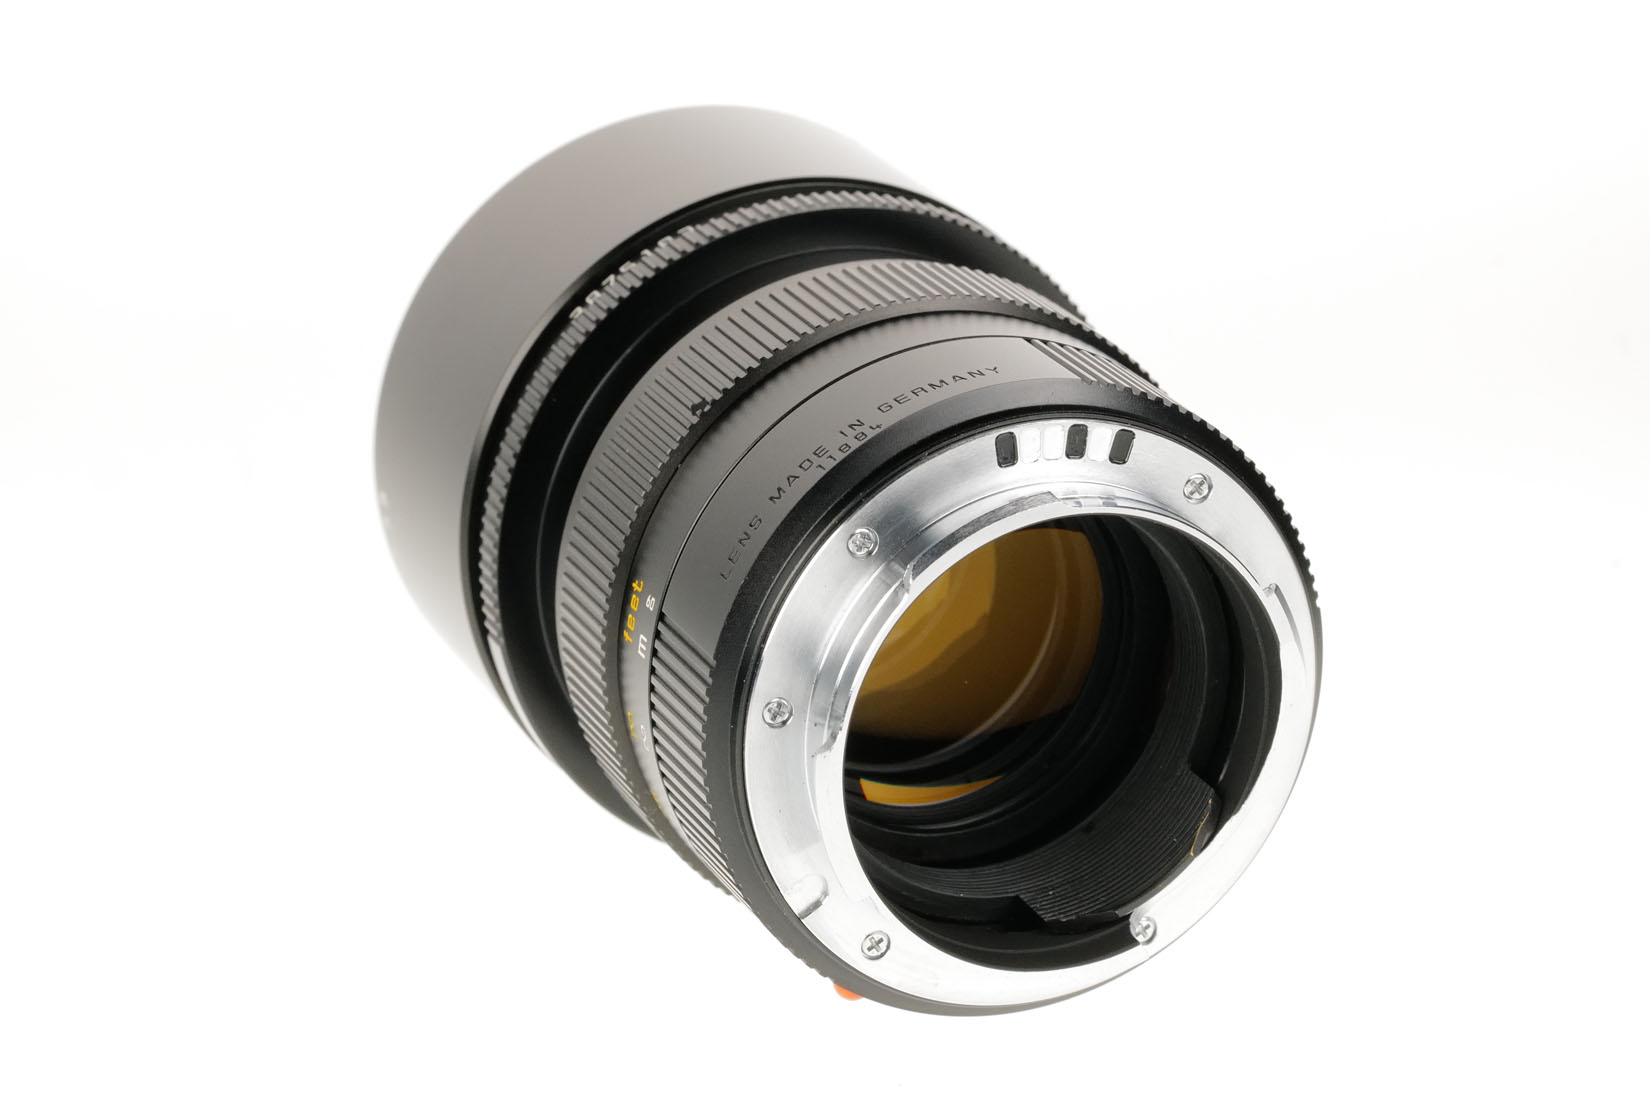 Leica APO-SUMMICRON-M 1:2/90 mm ASPH., schwarz 11884